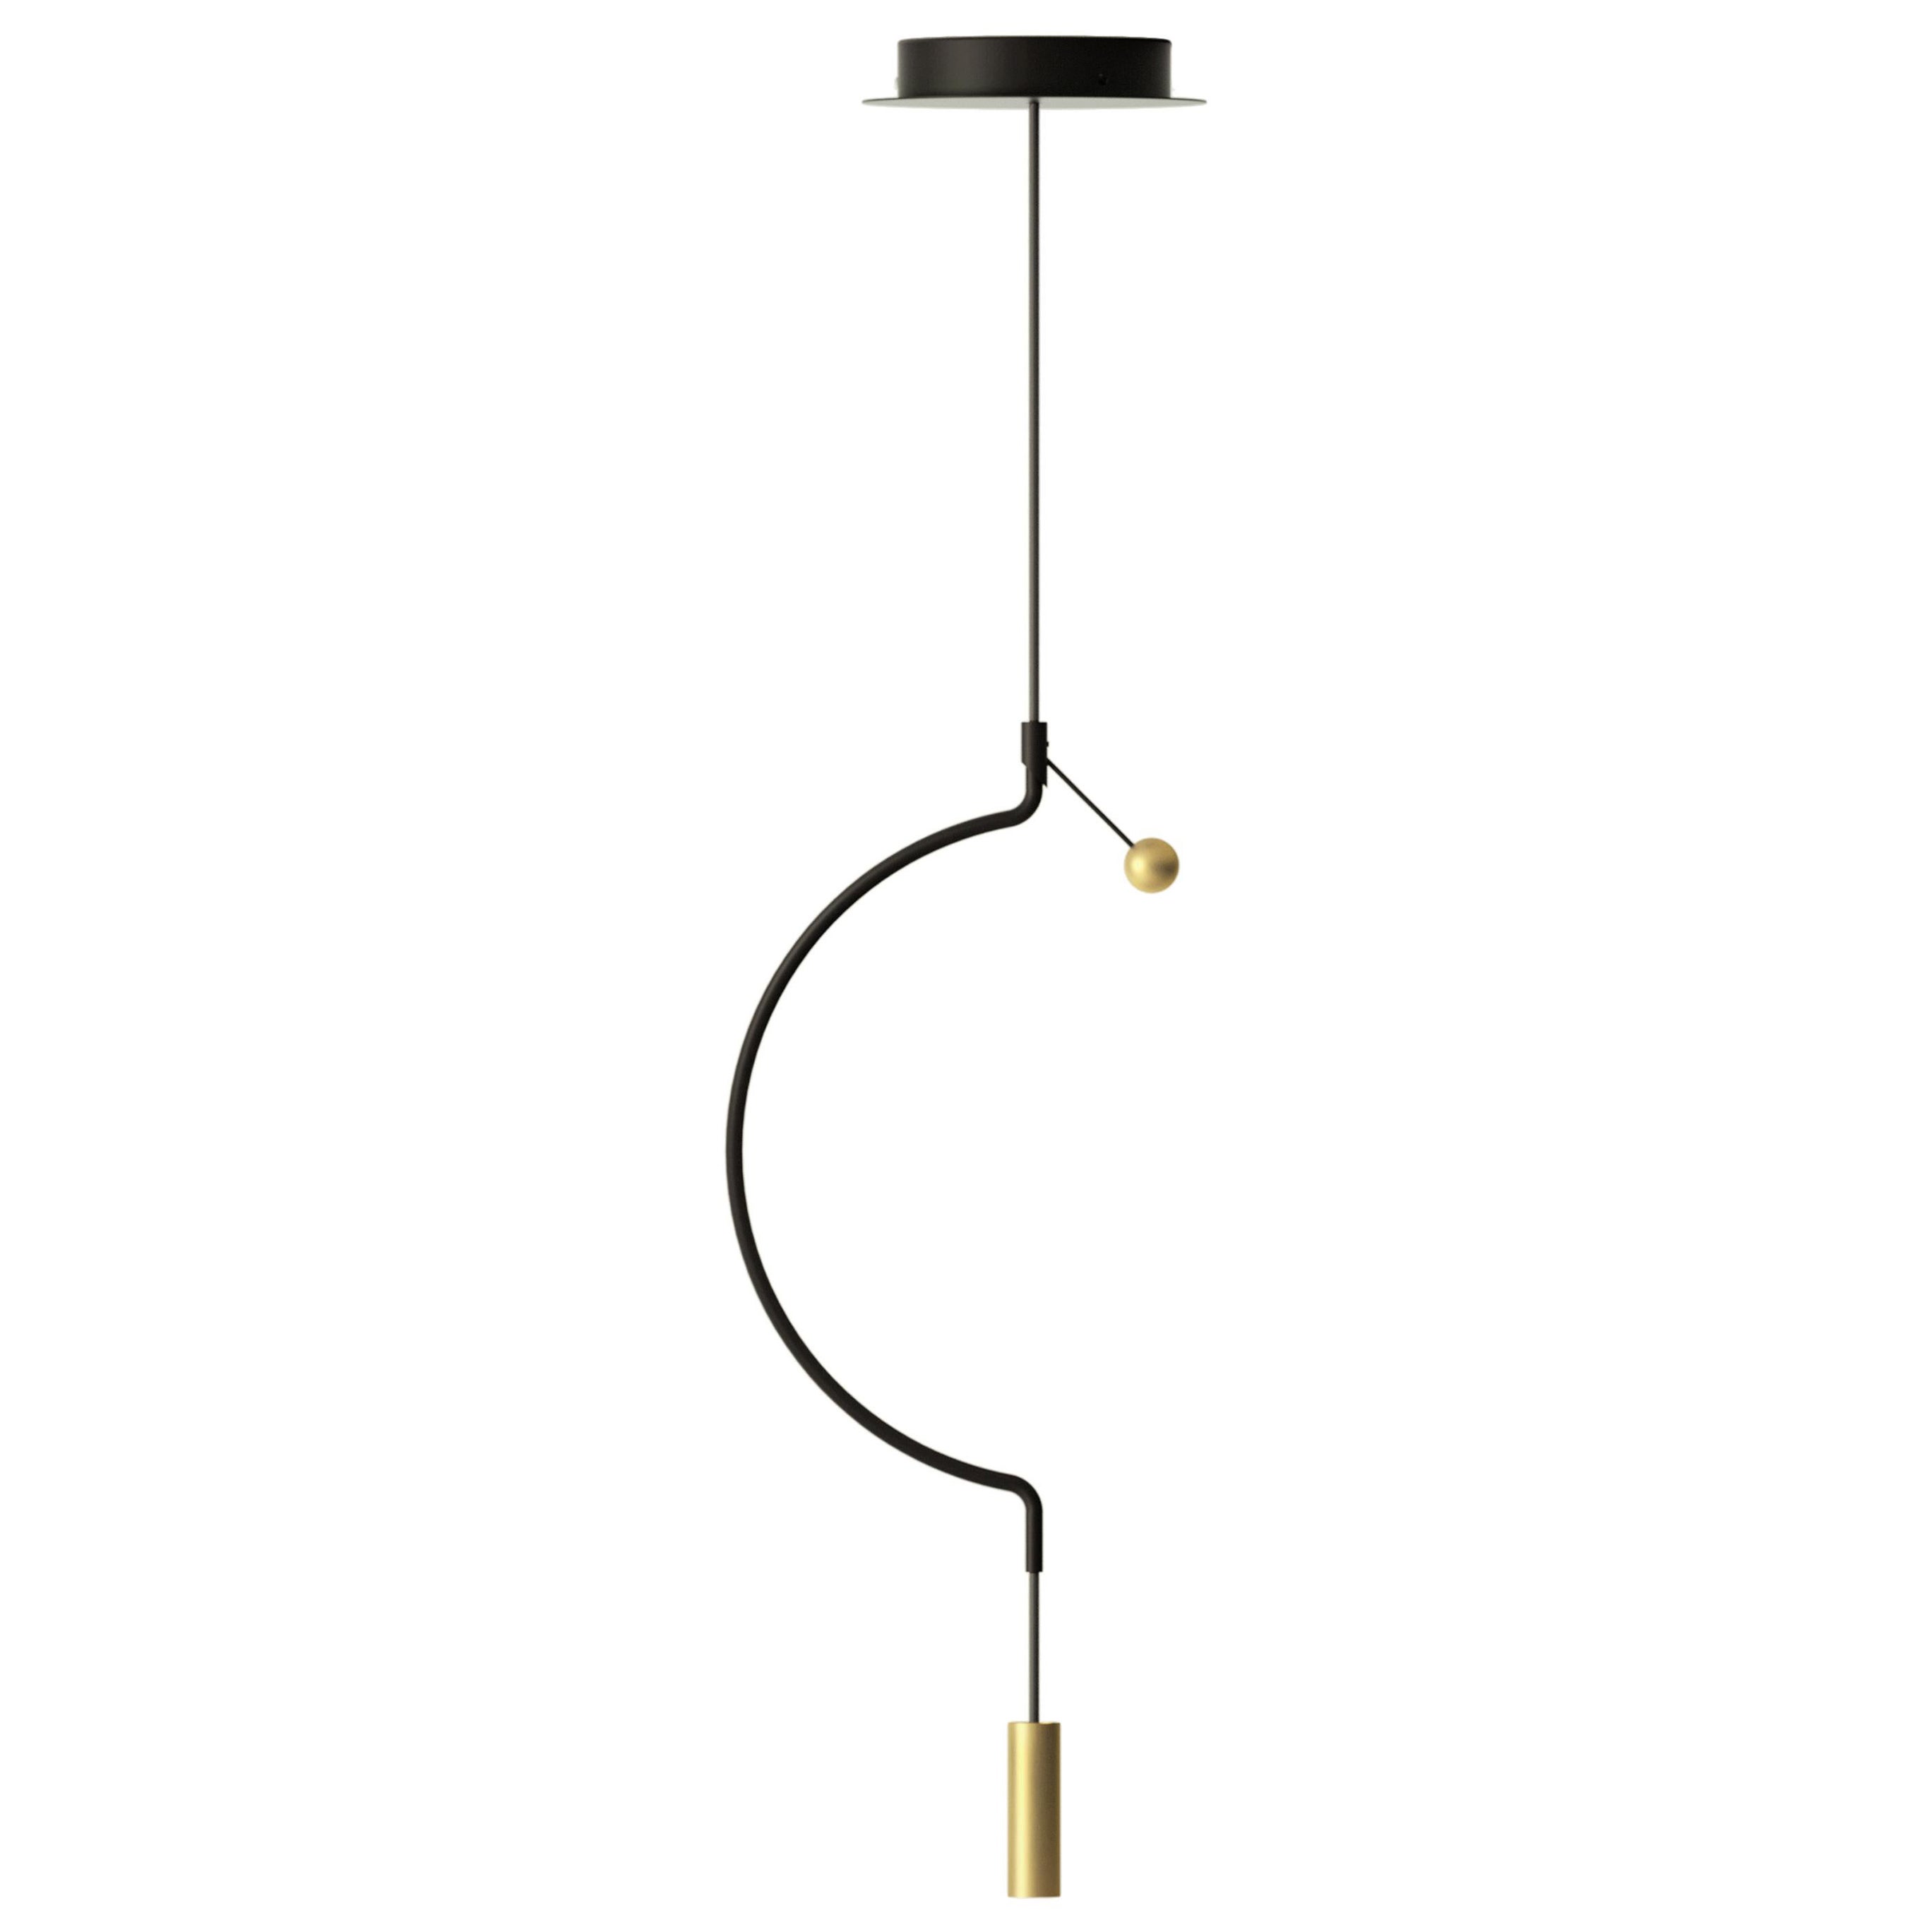 Axolight Liaison Model P1 Pendant Lamp in Black/Gold by Sara Moroni